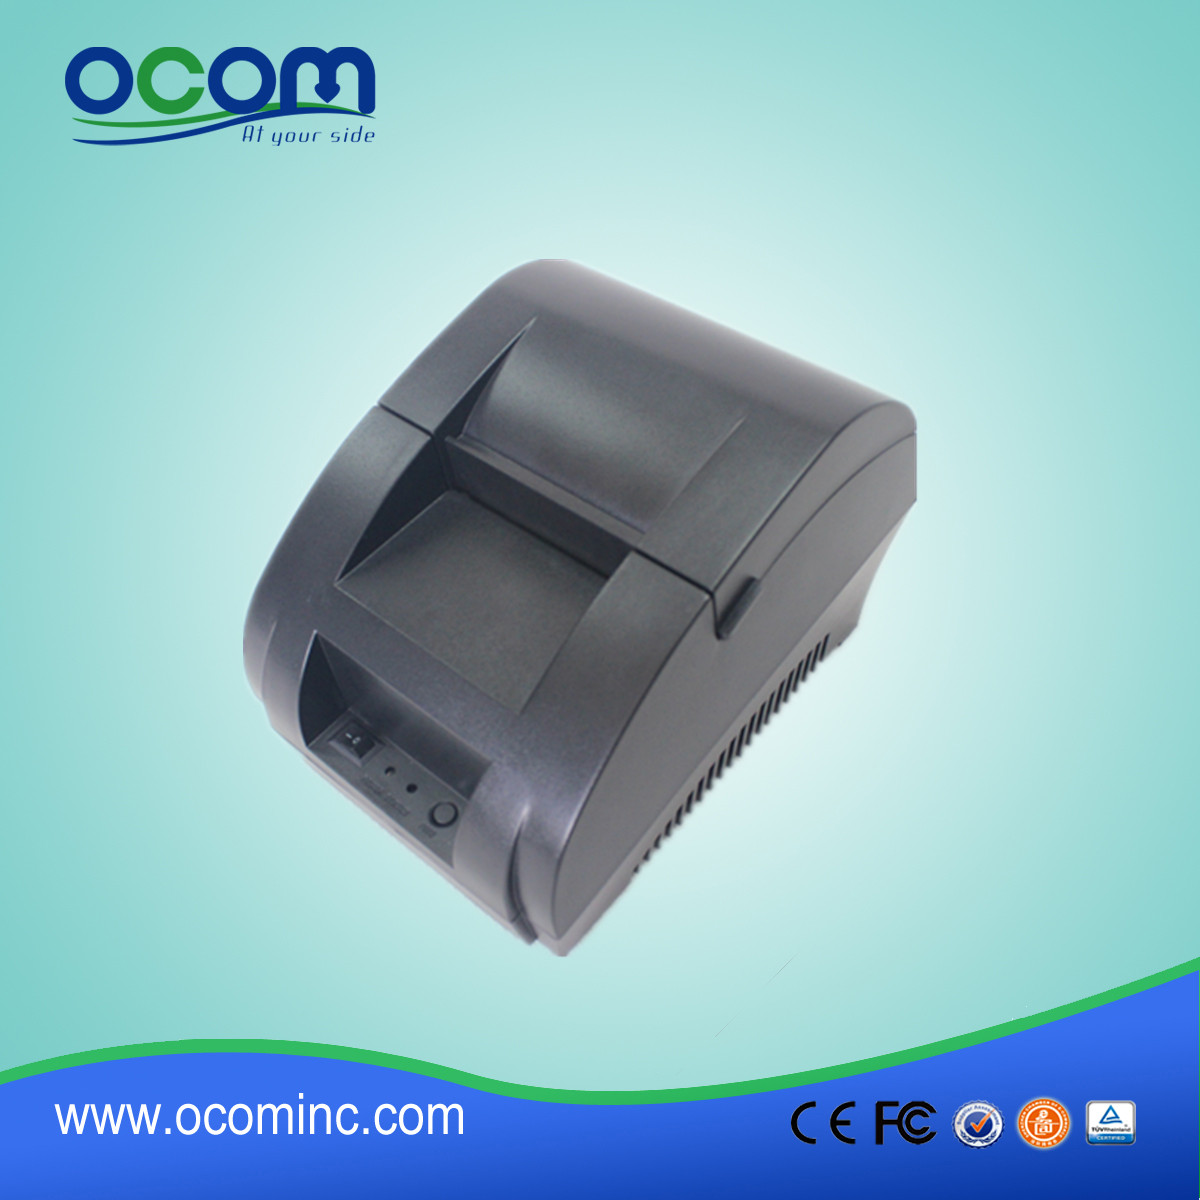 58mm热敏收据打印机，内置电源适配器OCPP-58Z-U1一维/二维码打印